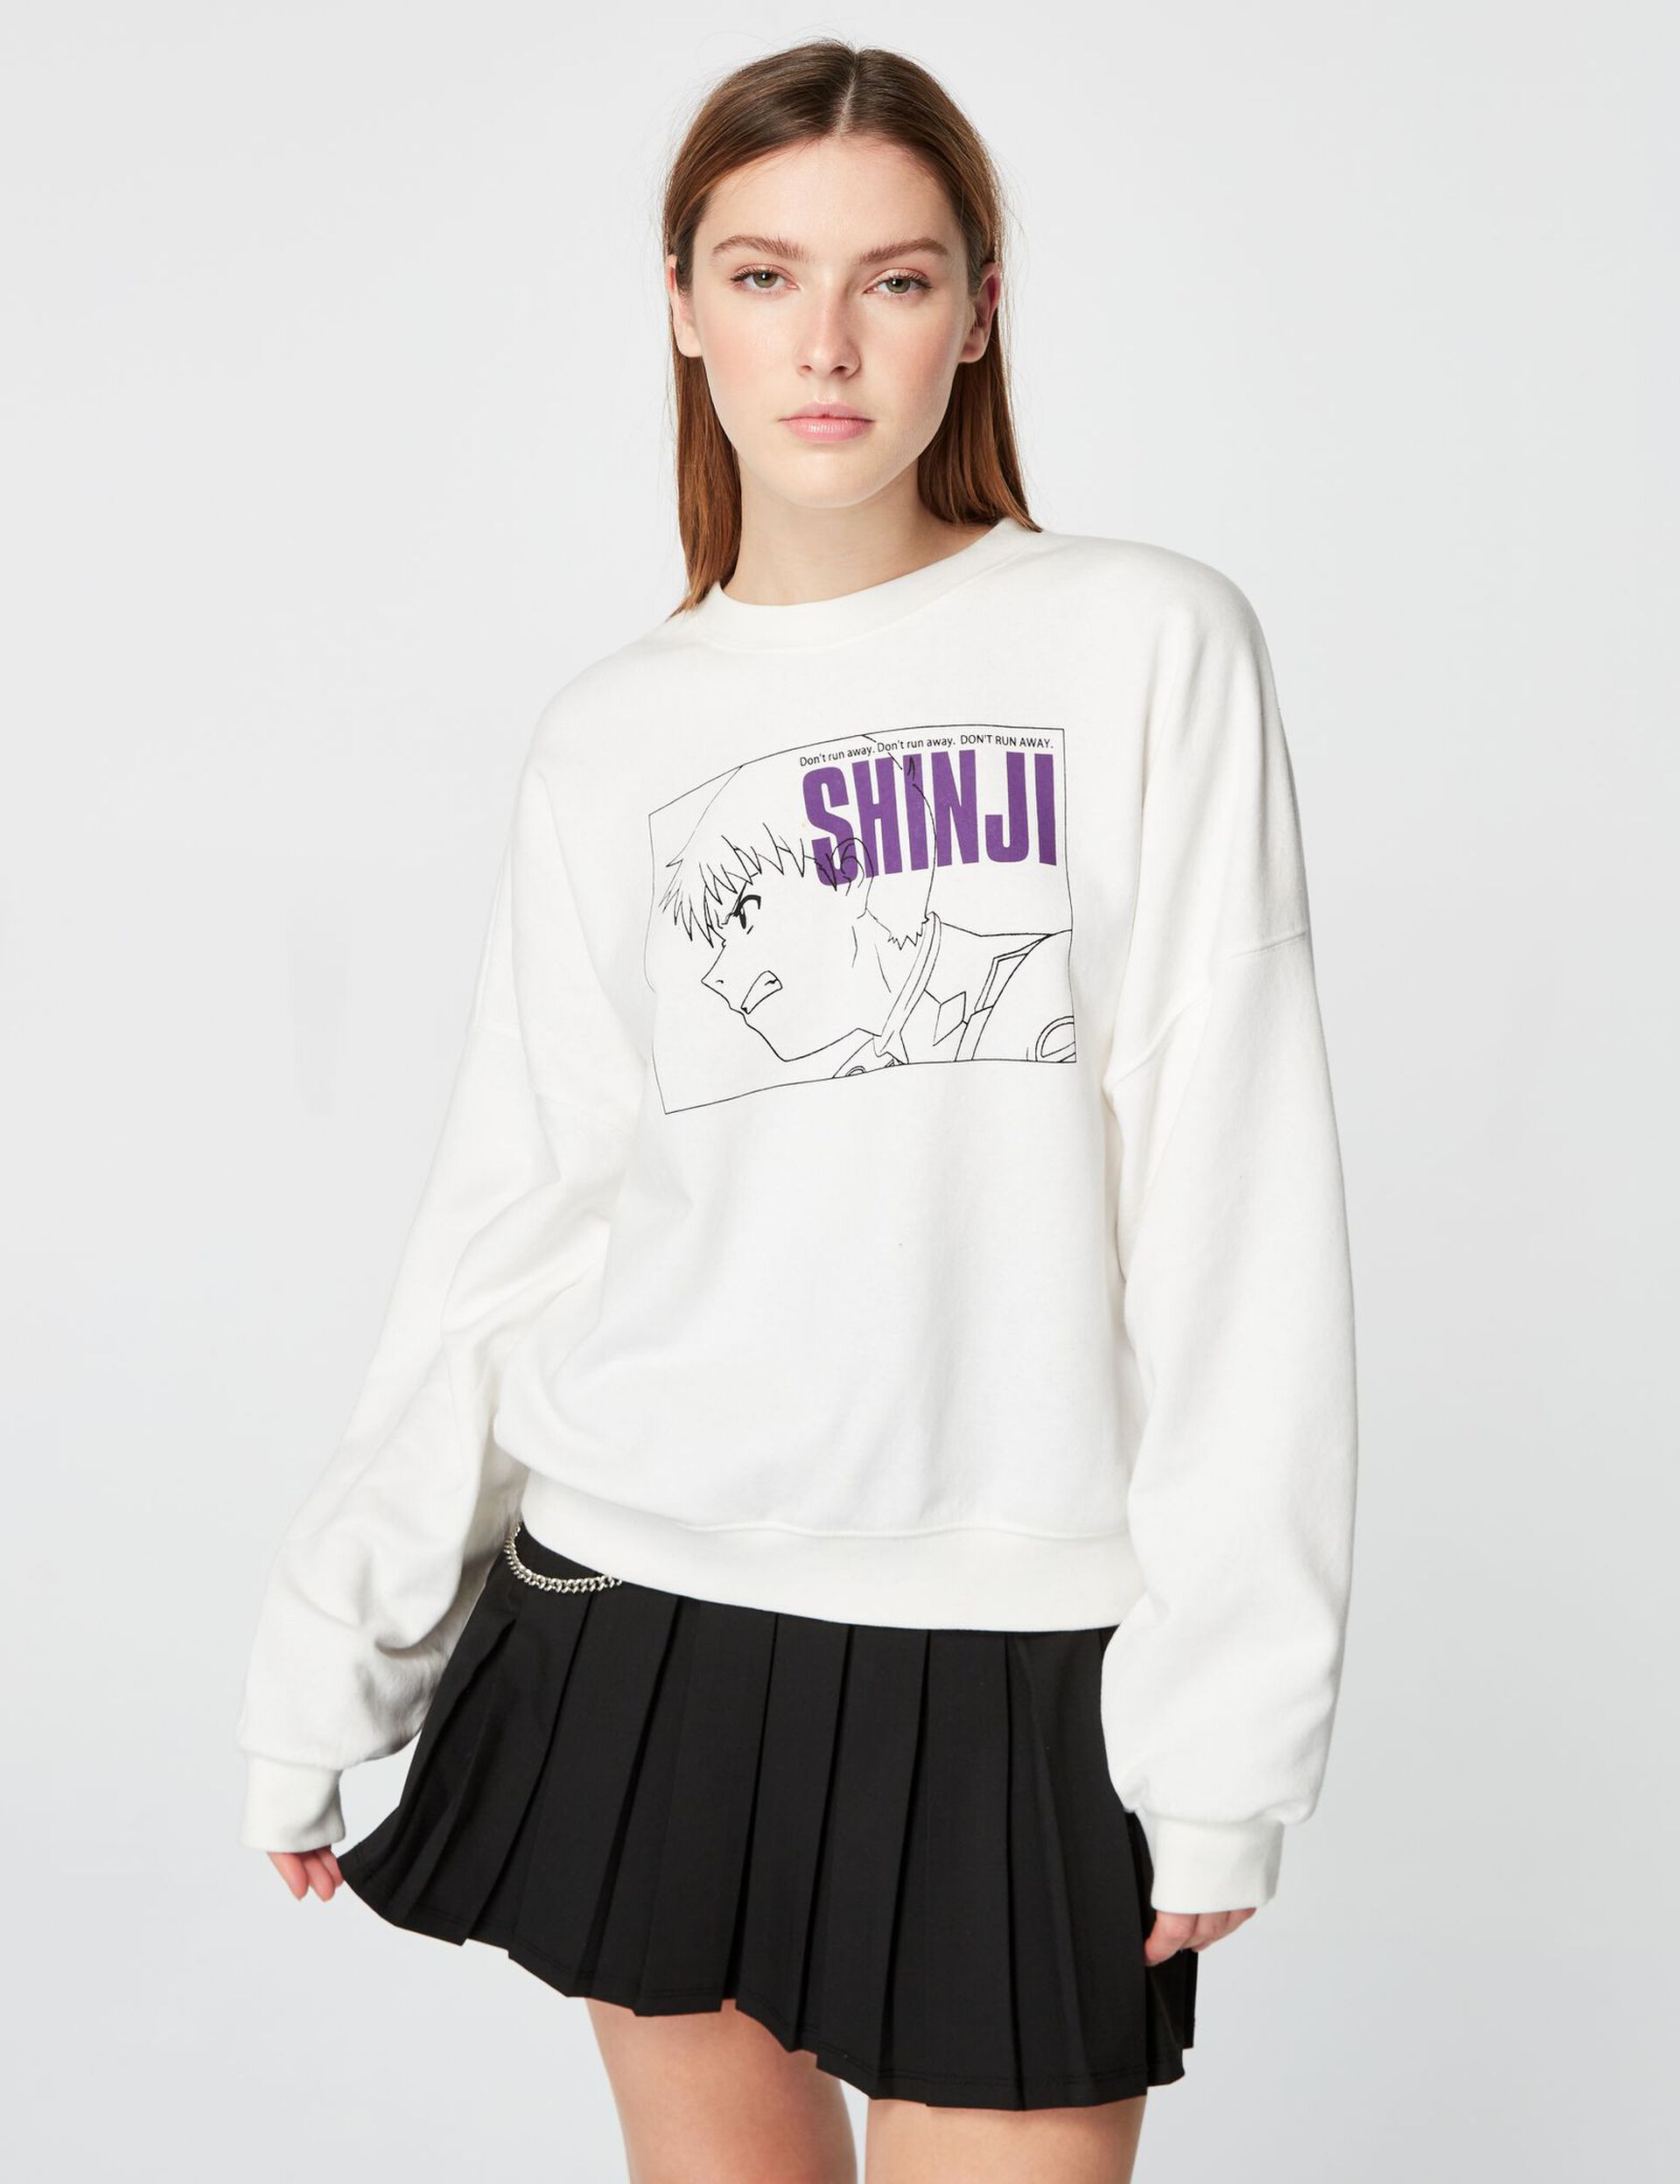 Evangelion Shinji sweatshirt